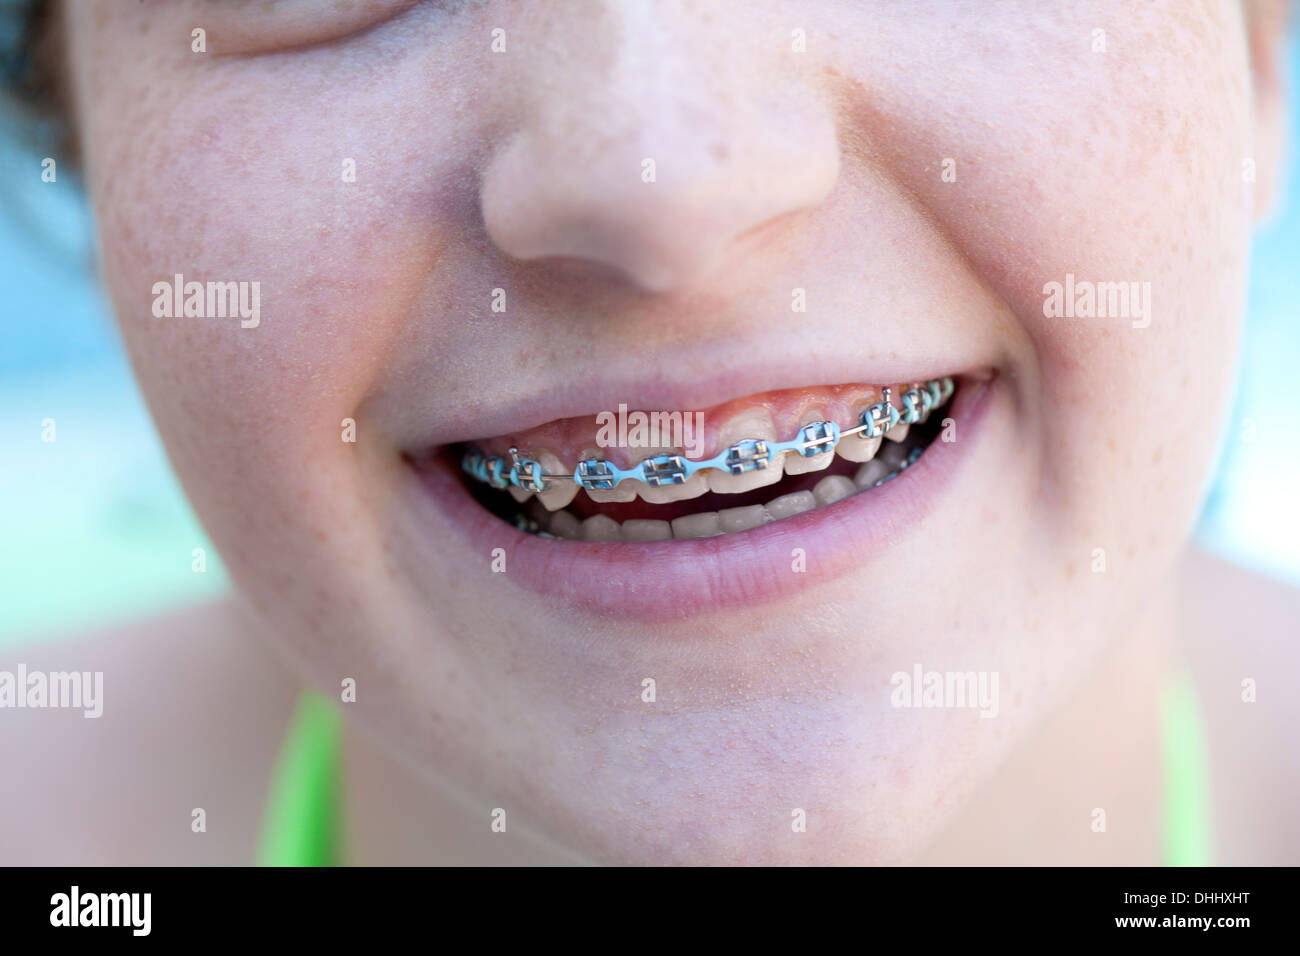 Girl with dental braces Stock Photo